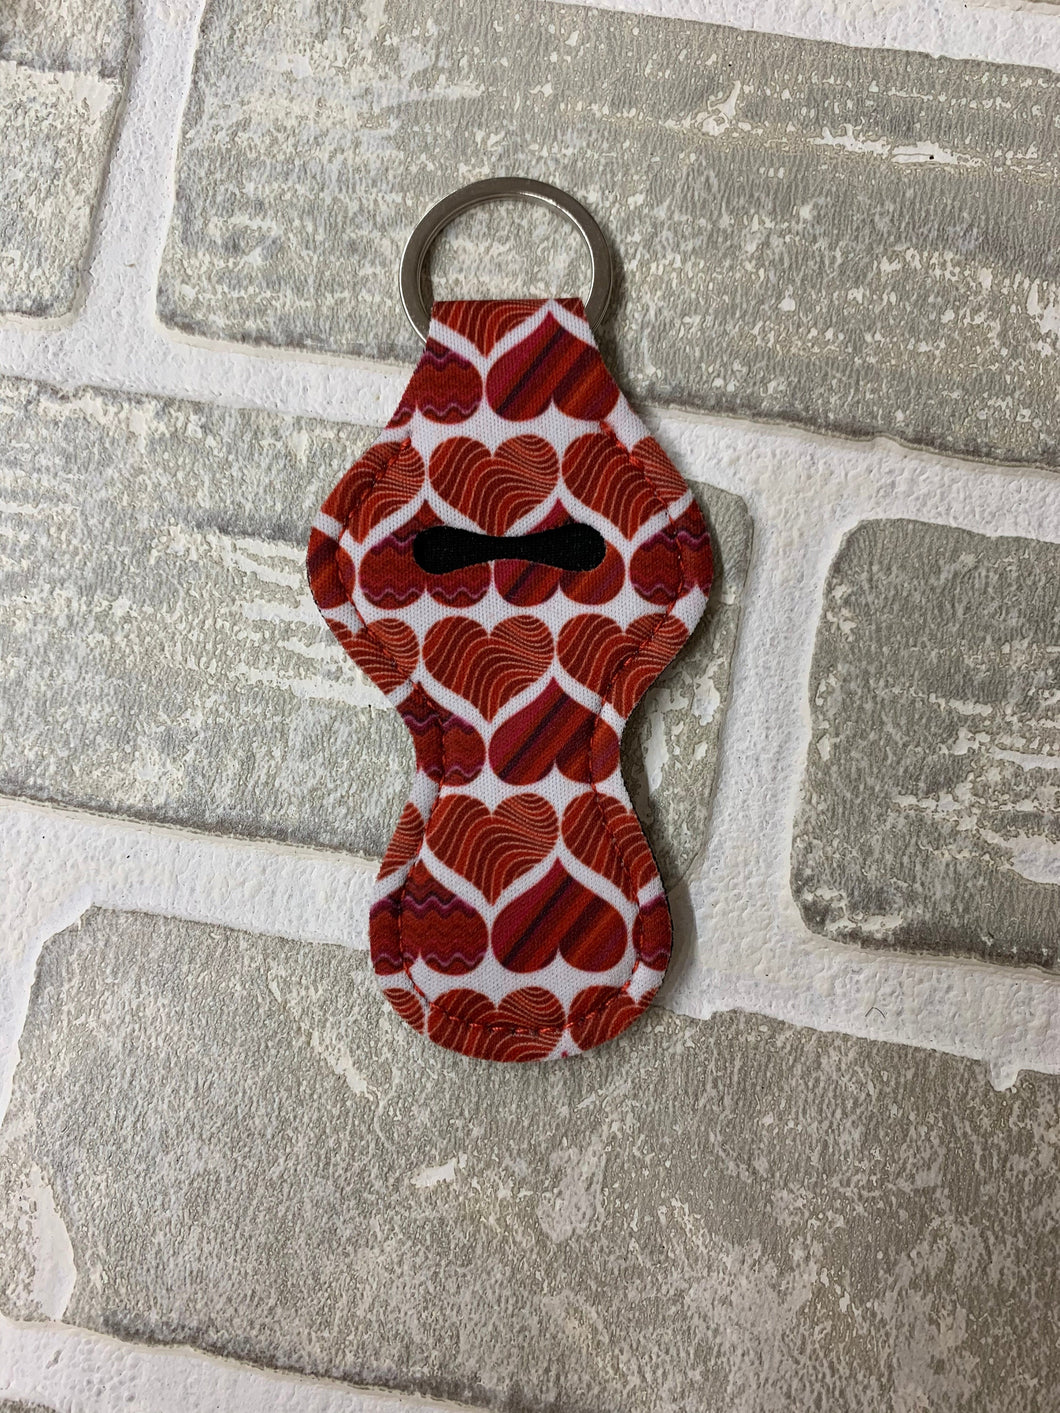 Red hearts chapstick holder keychain blanks